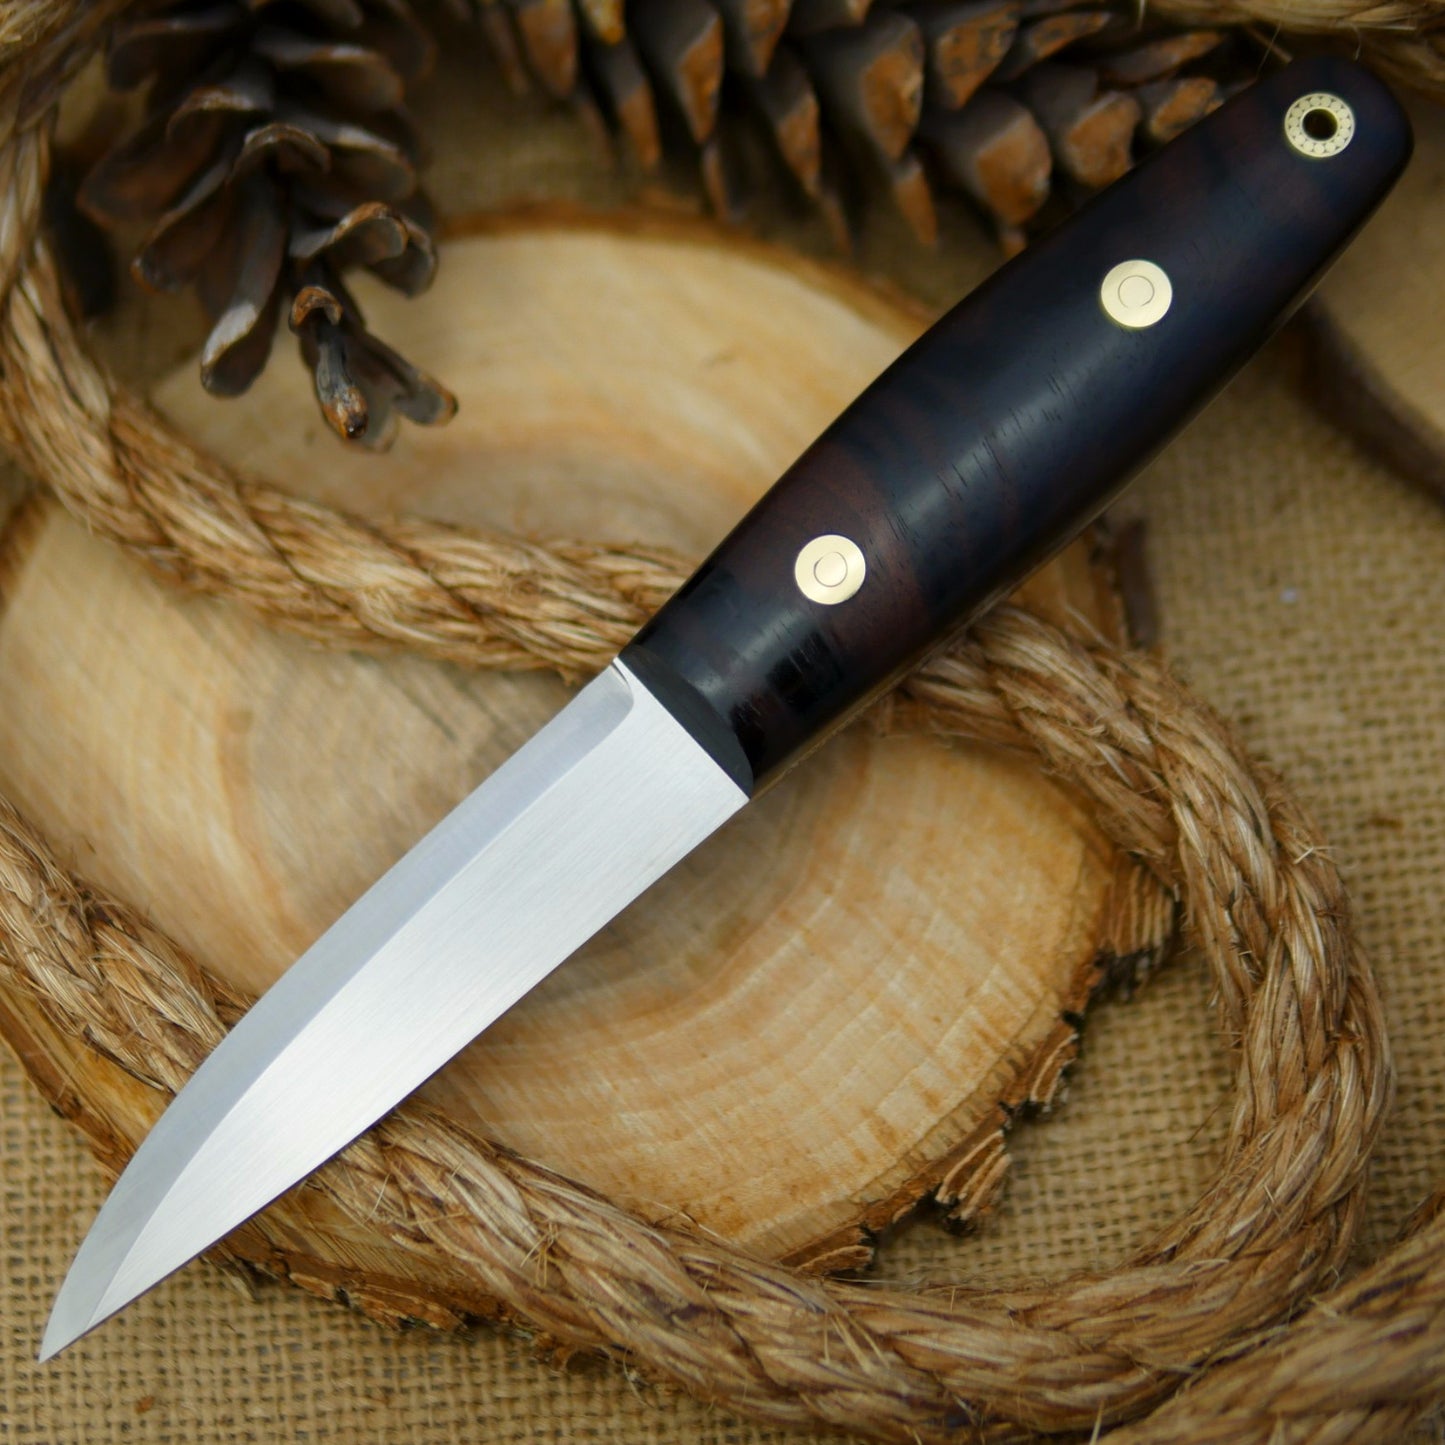 An Adventure Sworn Woodsman bushcraft knife with katalox handle scales.